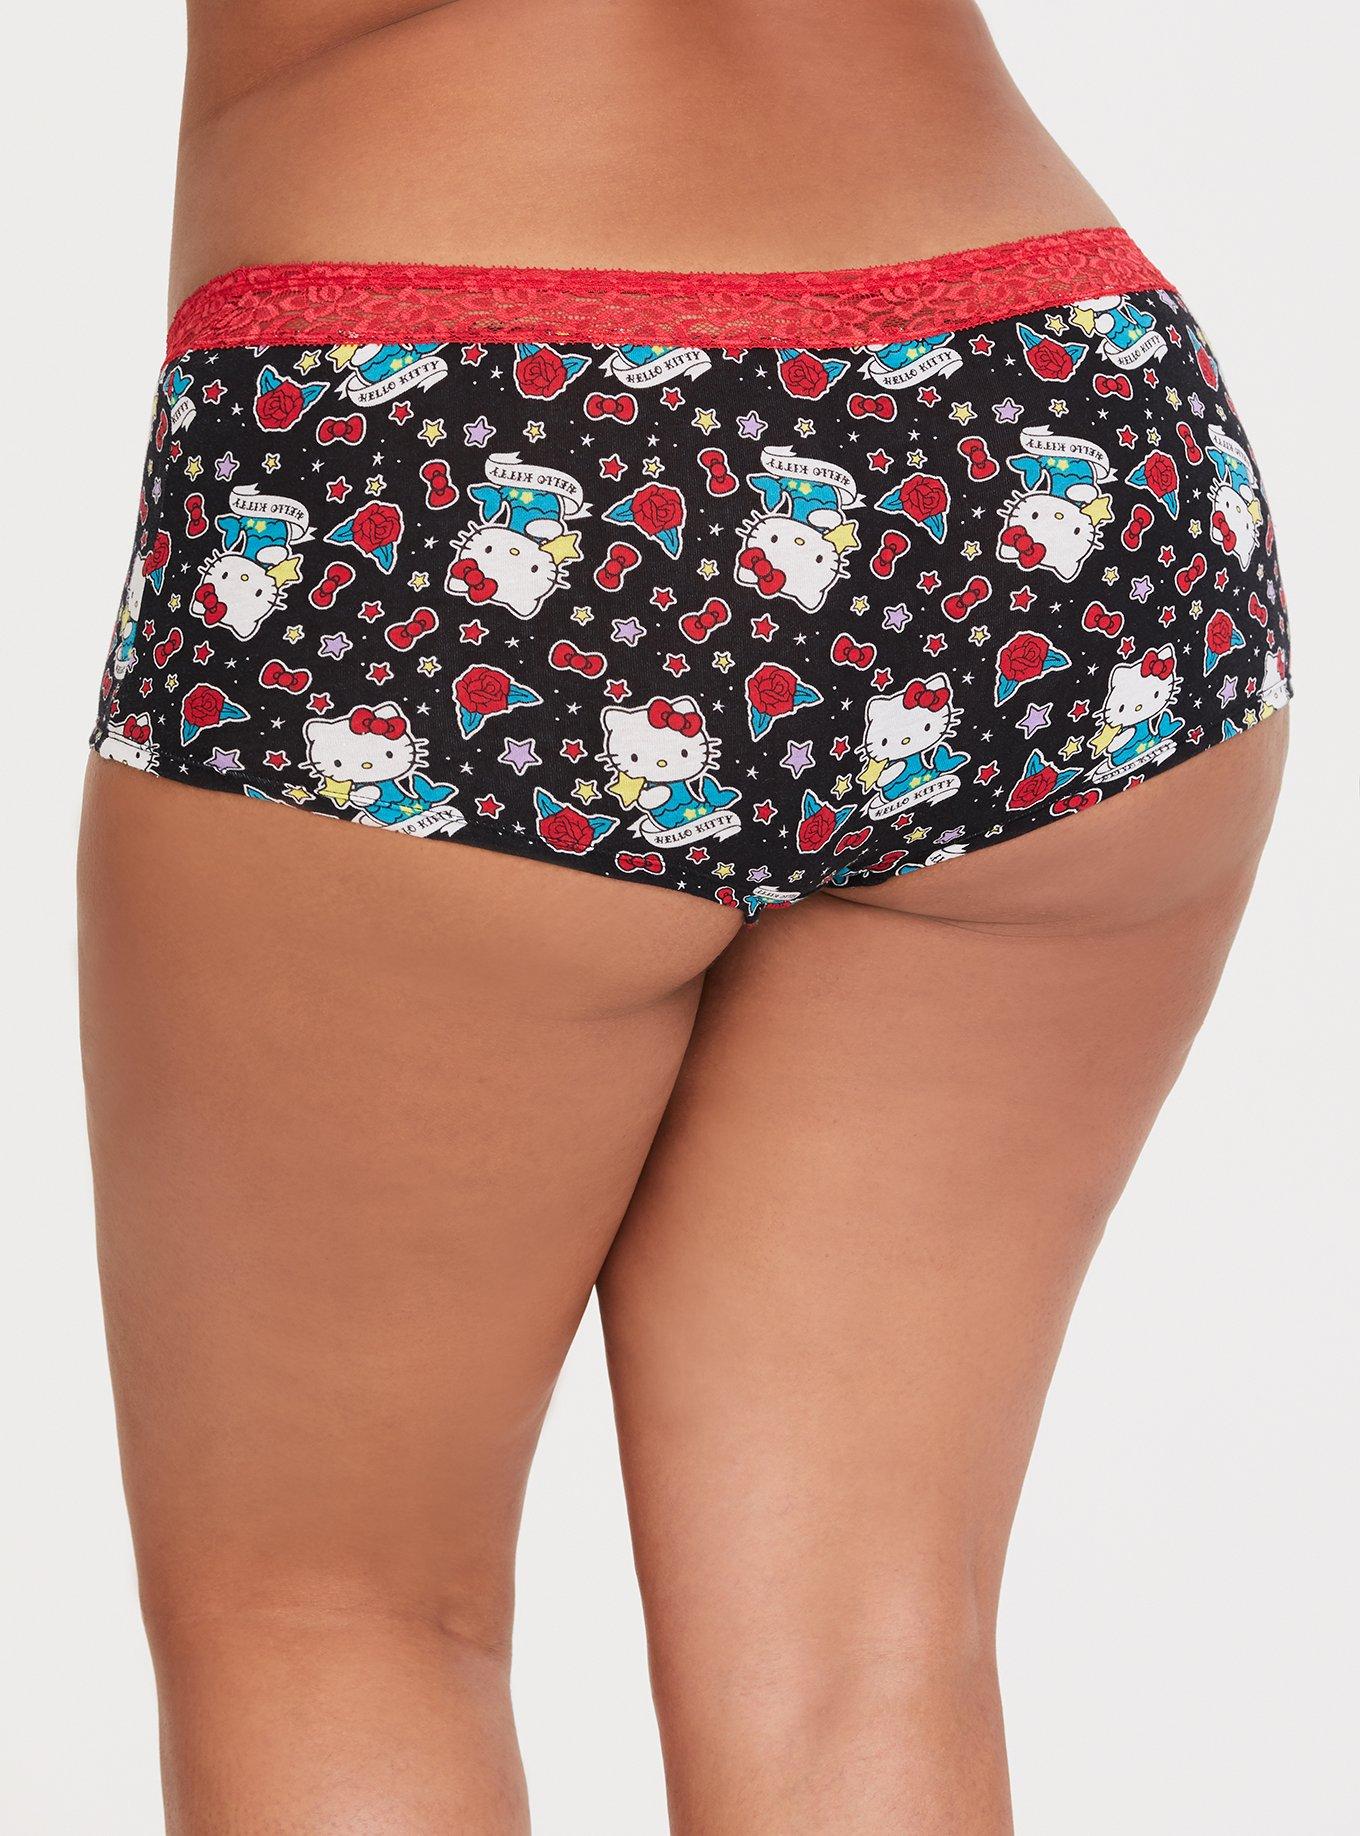 Torrid Disney Lilo & Stitch Cotton Boyshort Panty - 15037776